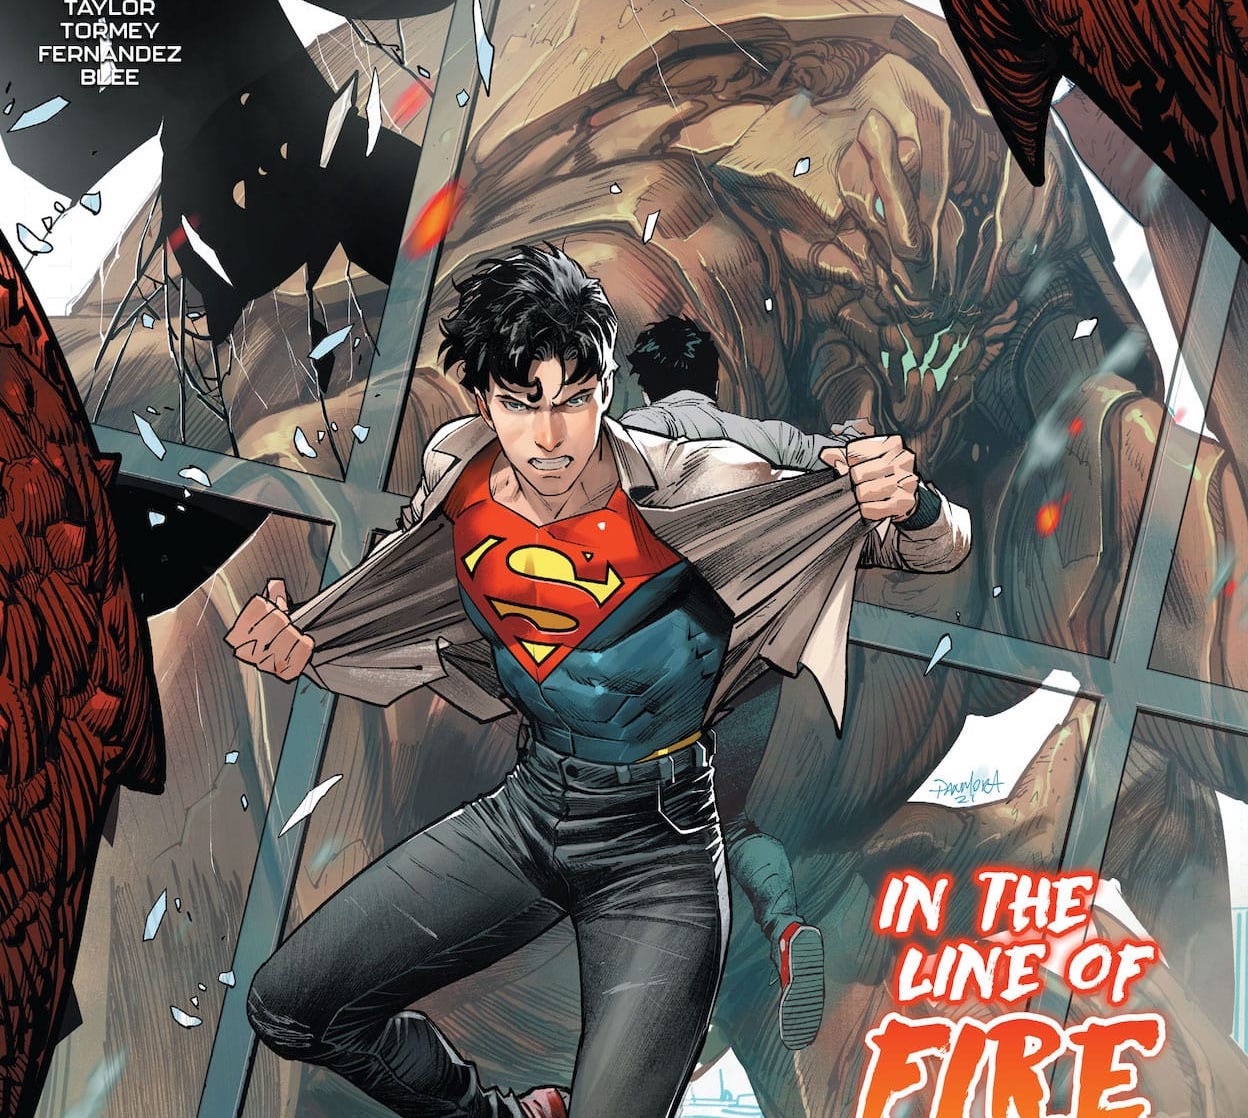 'Superman: Son of Kal-El' #8 gives Jon Kent a new direction